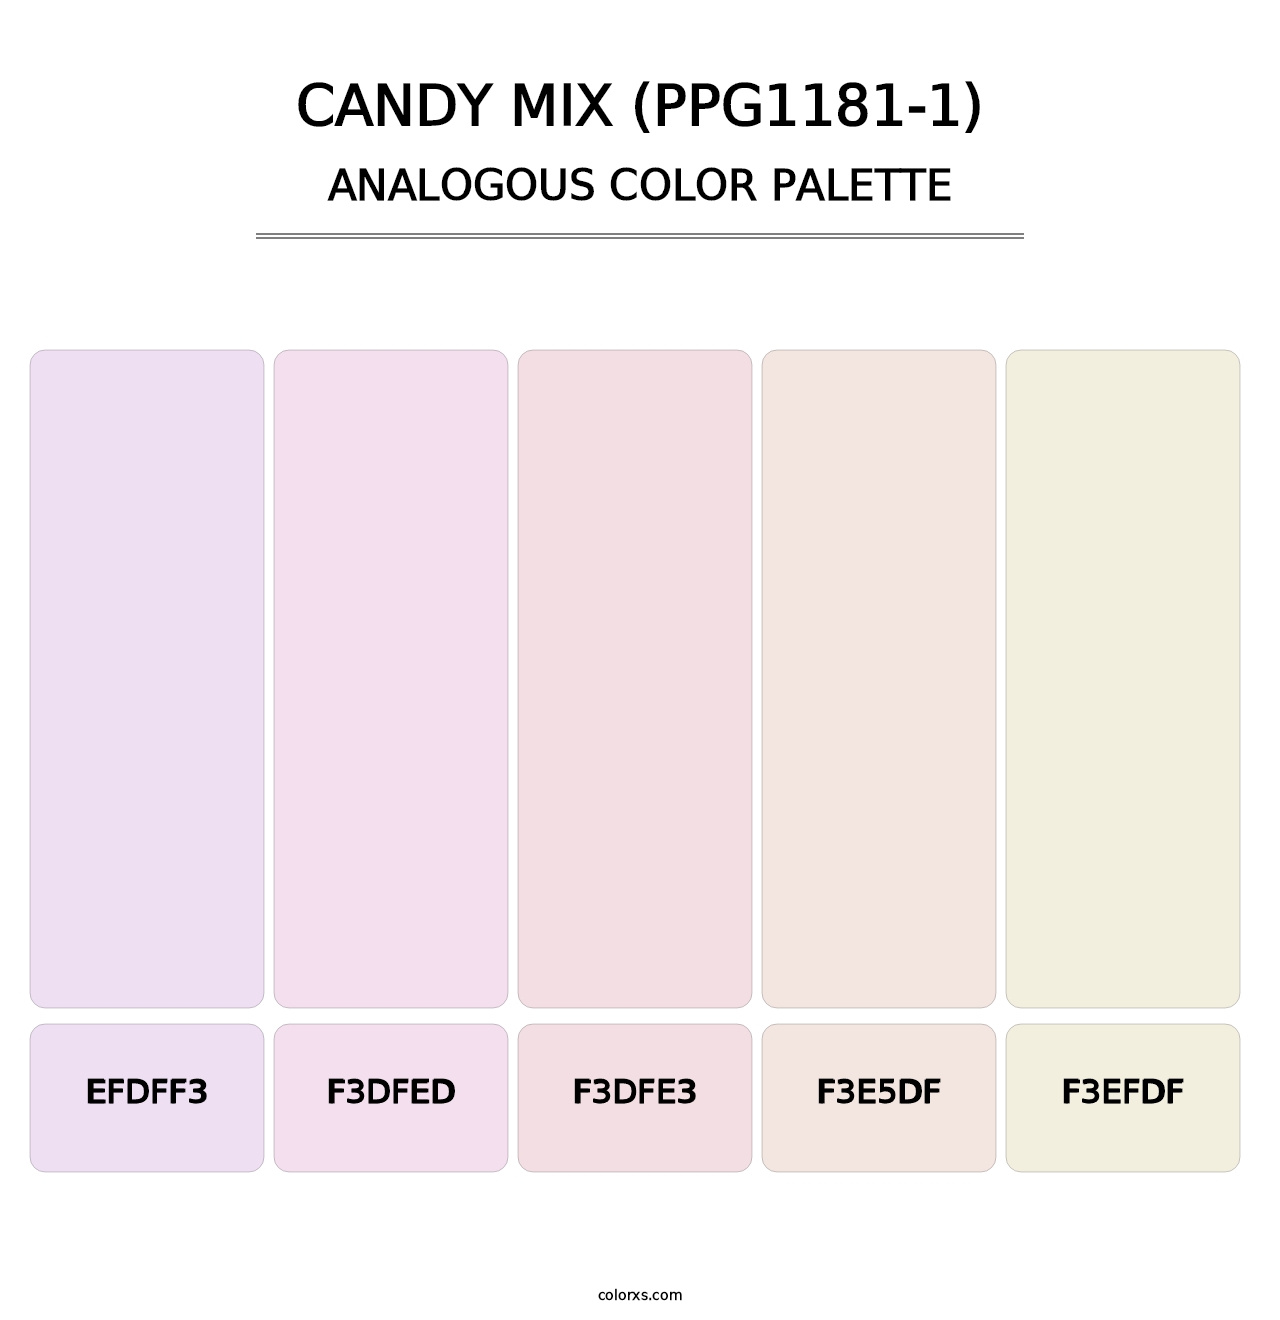 Candy Mix (PPG1181-1) - Analogous Color Palette